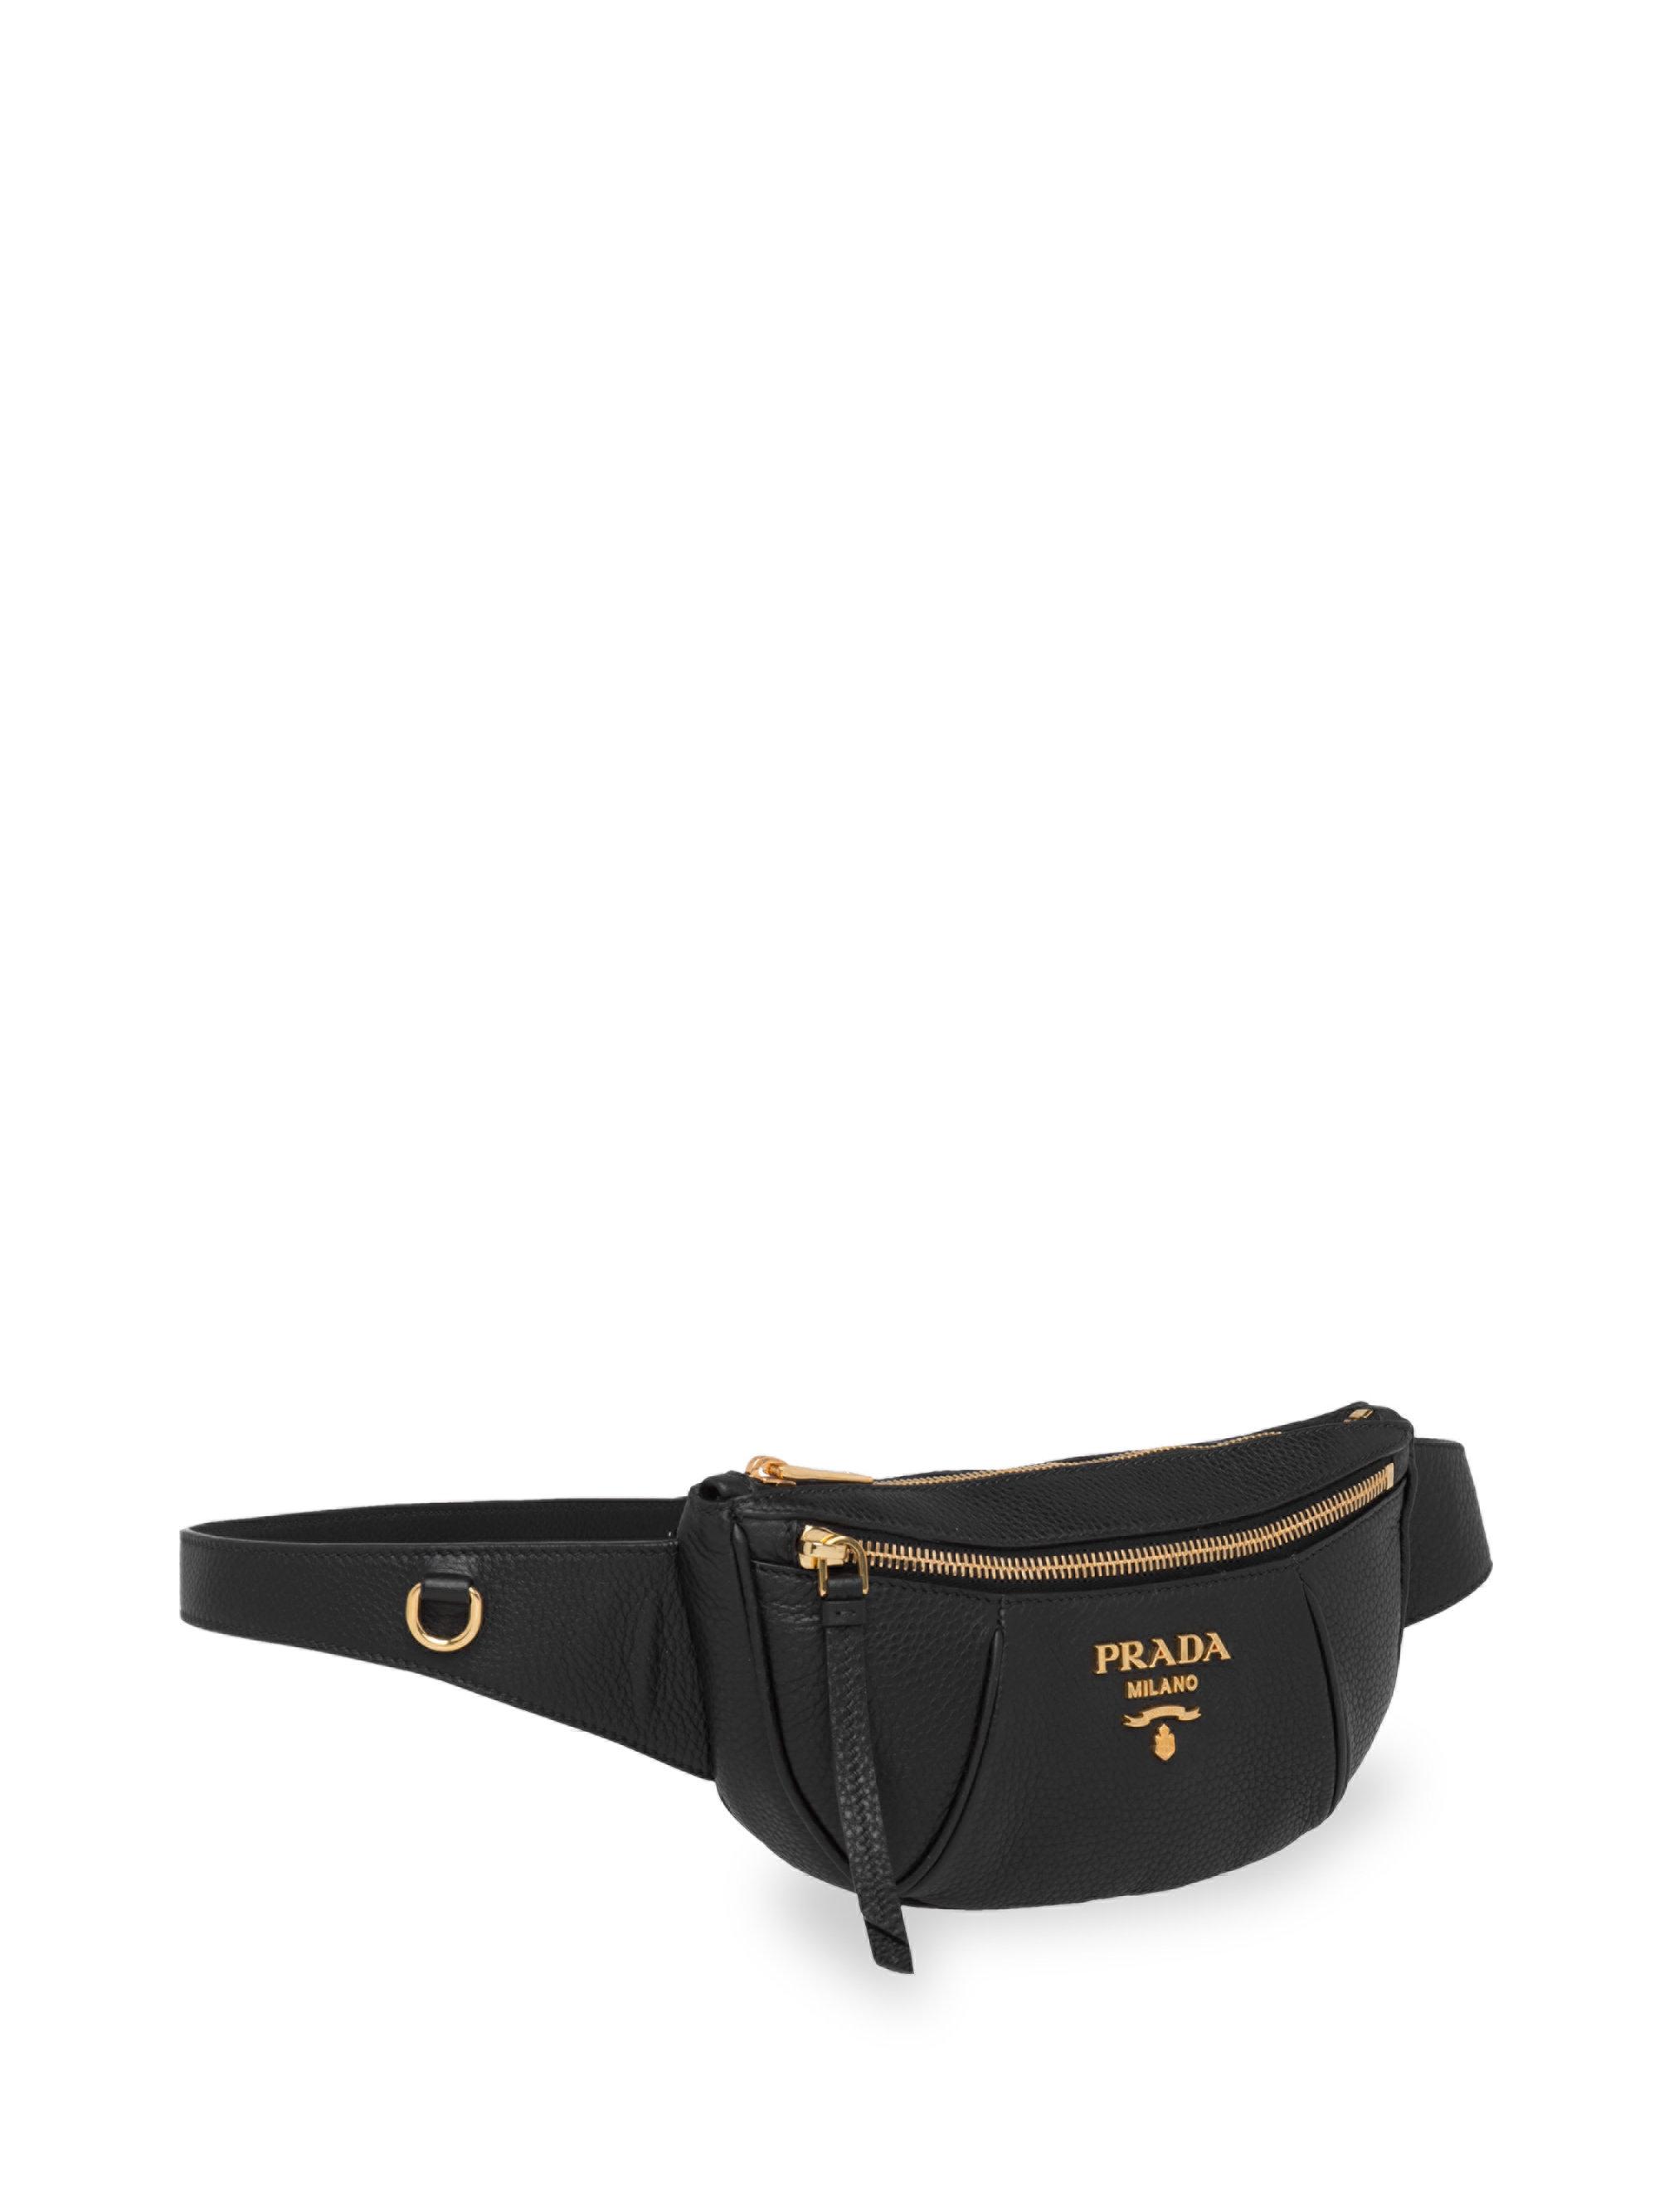 Prada Vitello Daino Pebbled Leather Belt Bag in Black | Lyst